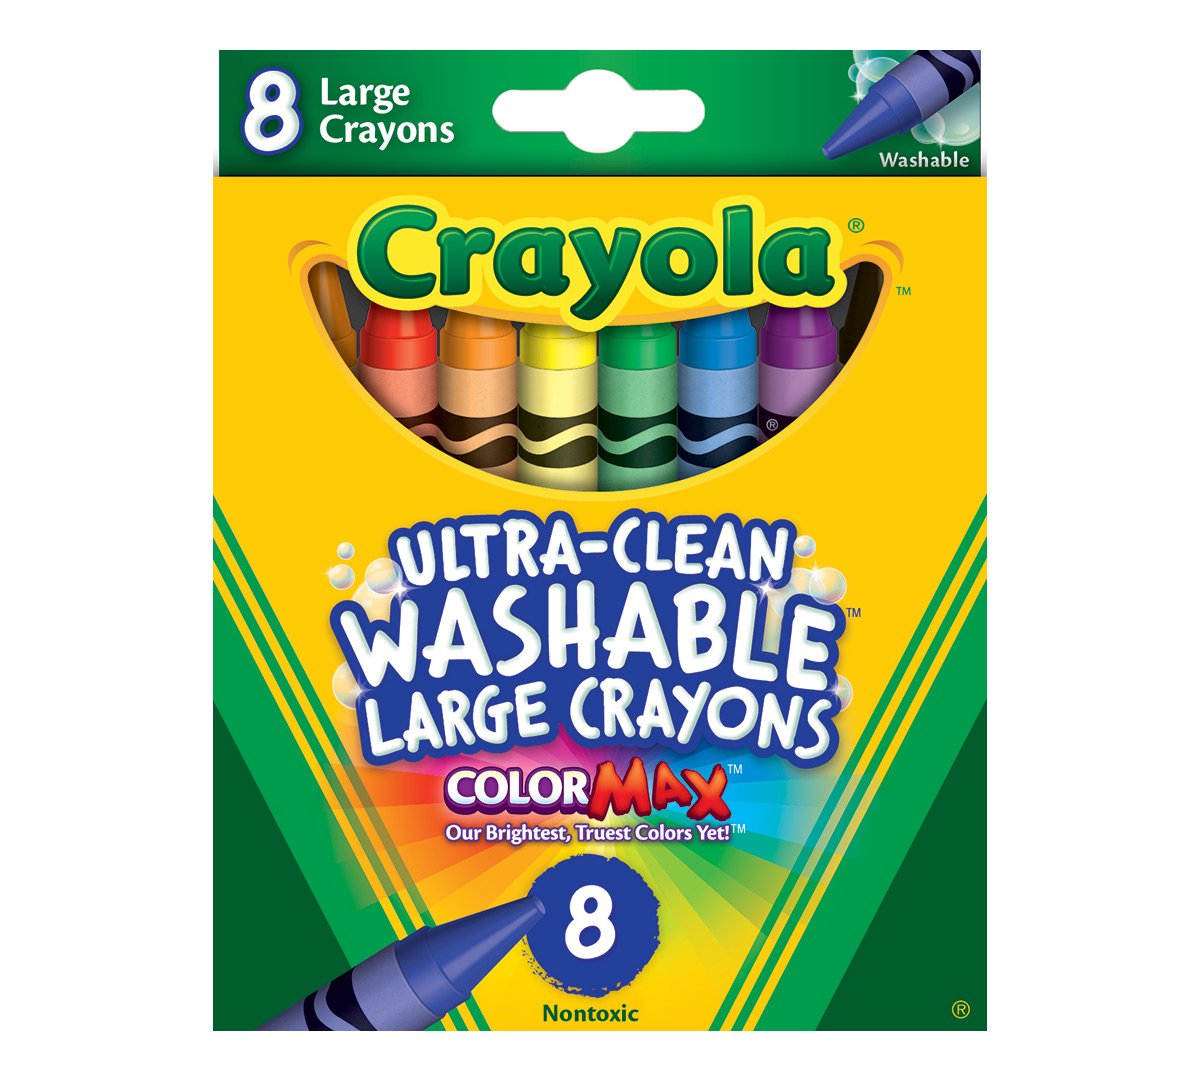 Crayola® Colored Chalk - 8 Packs